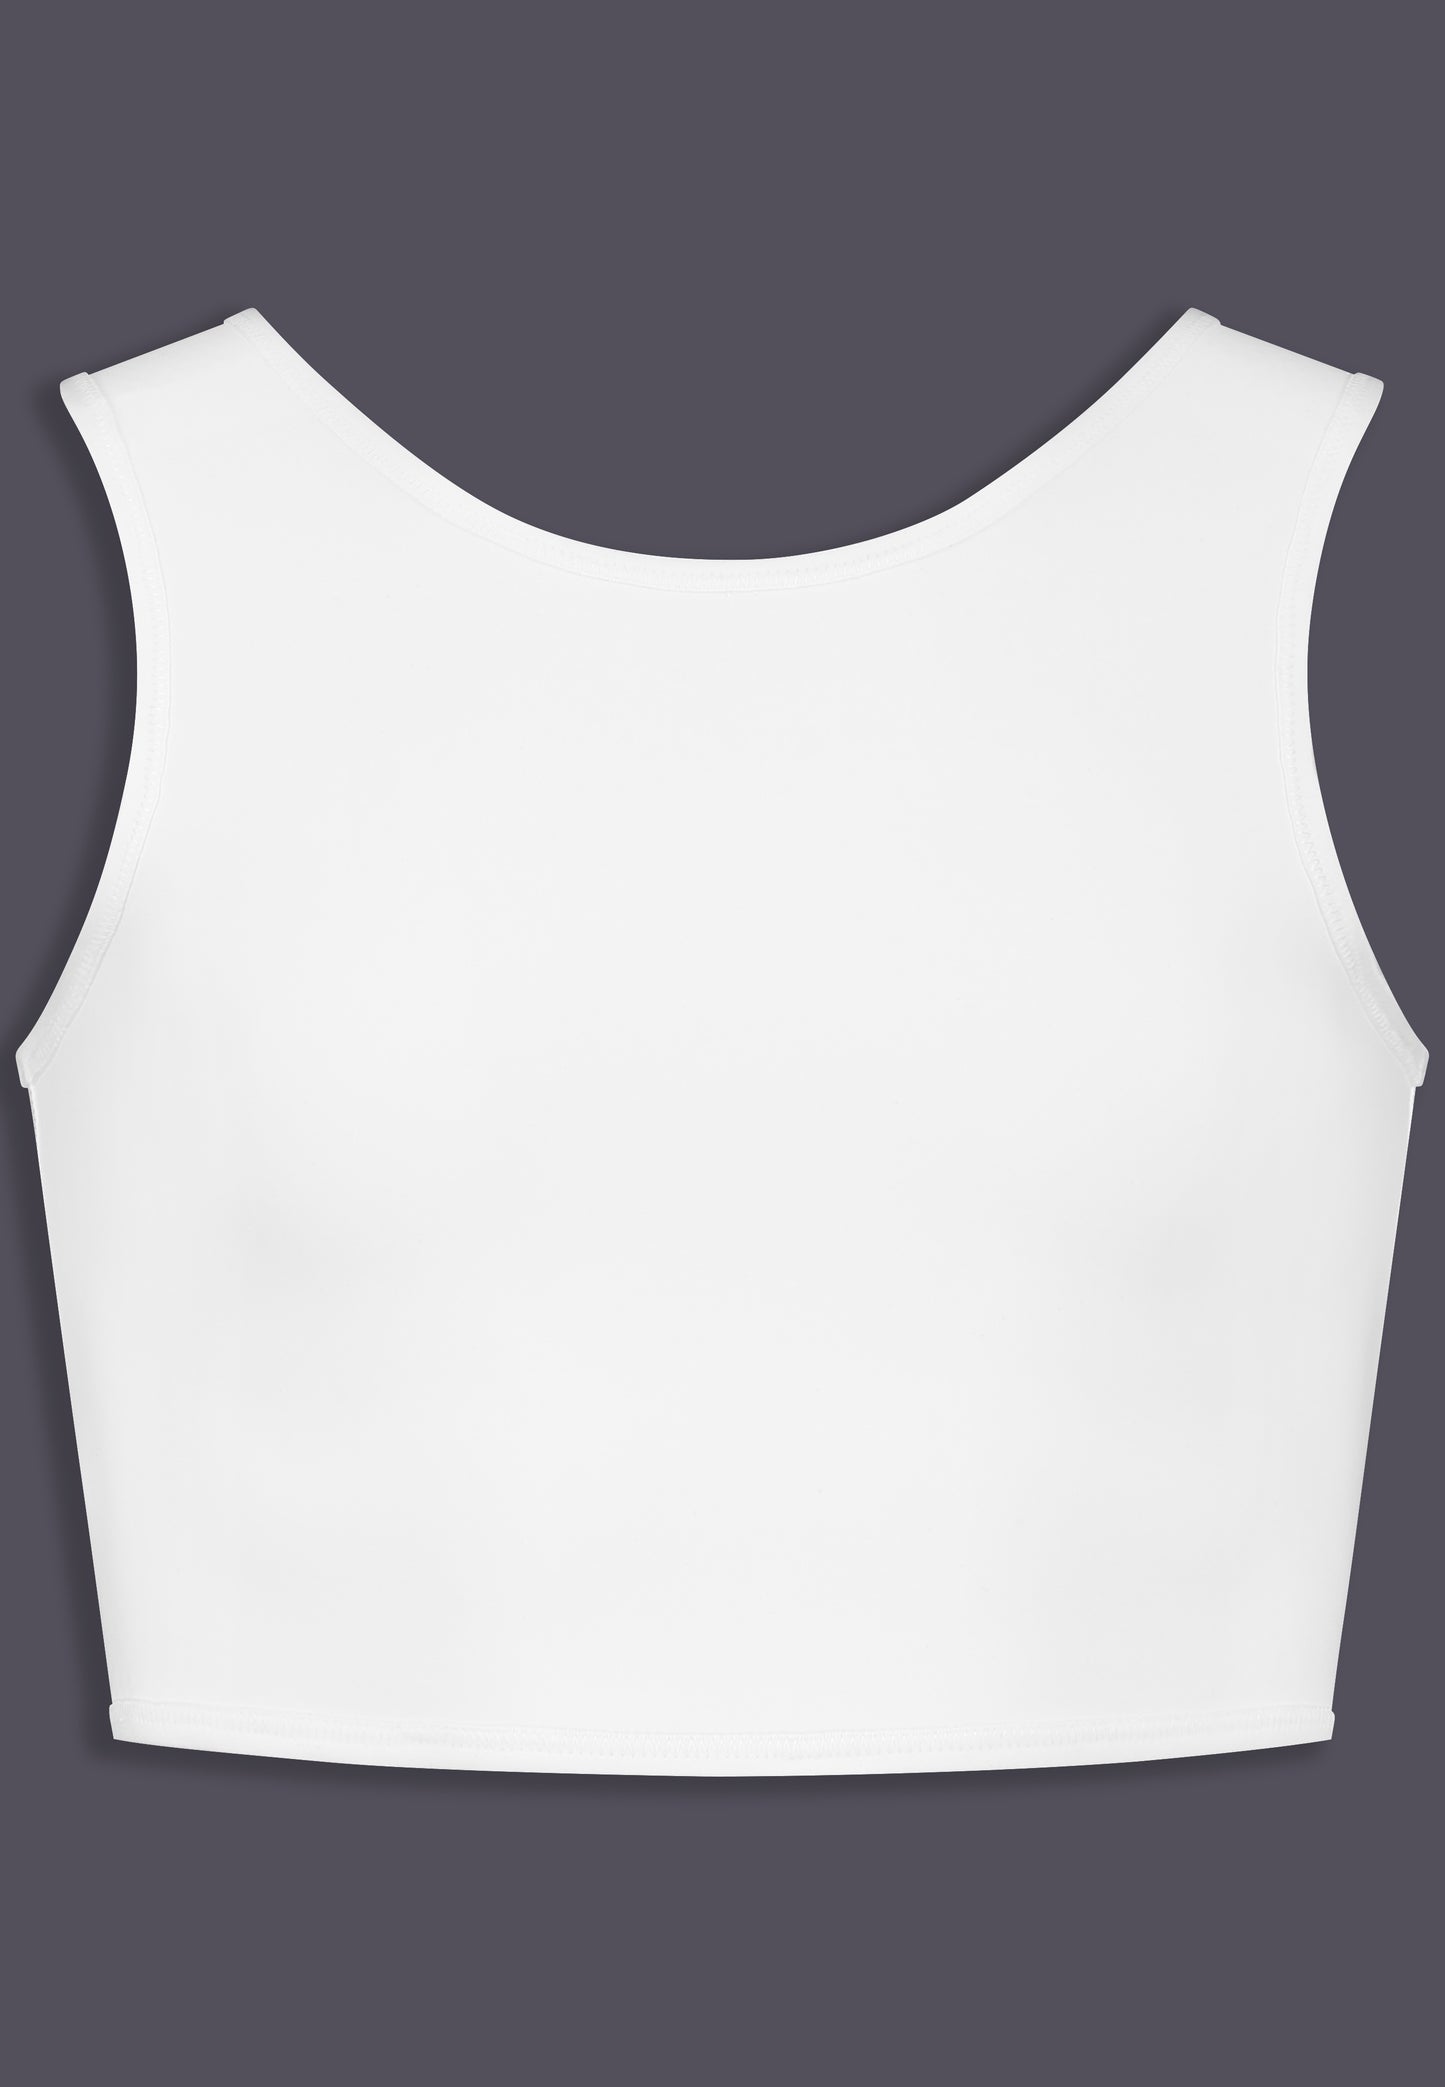 Short chest binder white front view